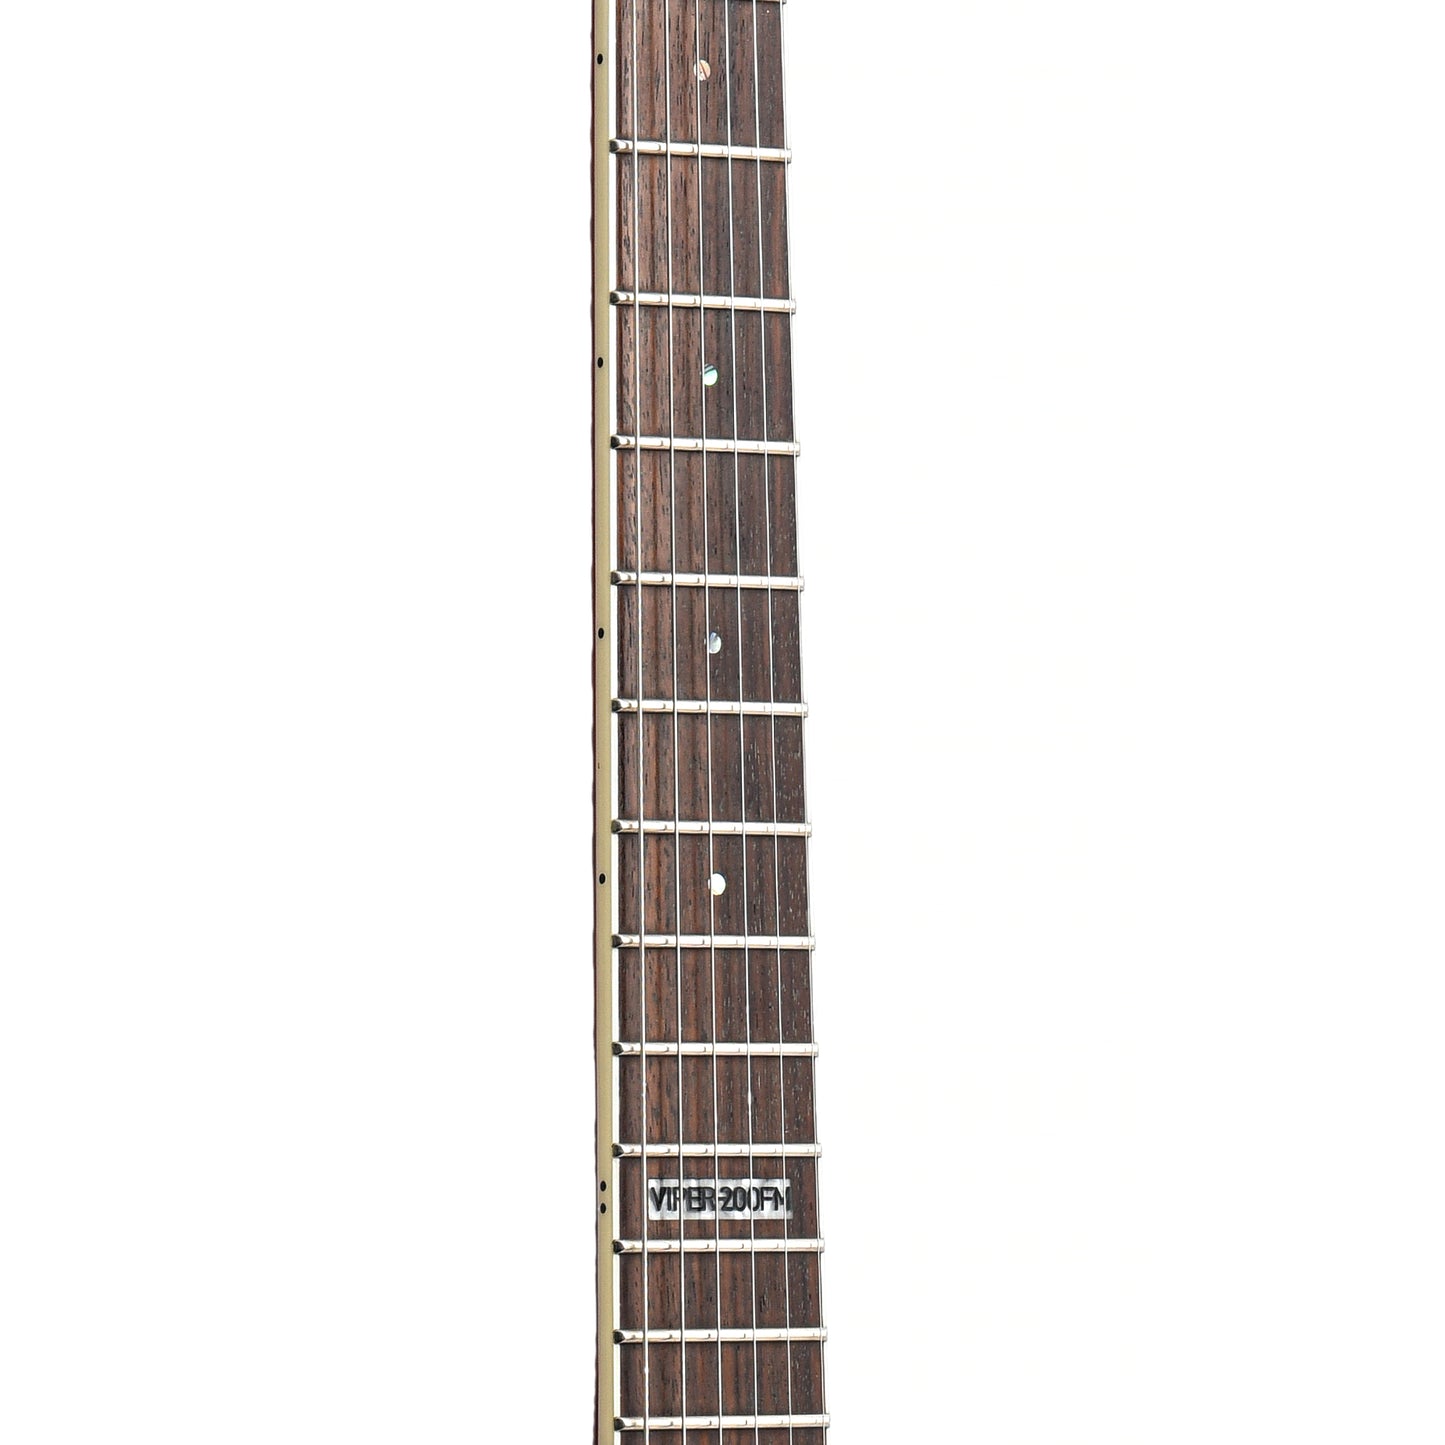 Image 8 of ESP LTD Viper 200FM (2008) - SKU# 30U-208668 : Product Type Solid Body Electric Guitars : Elderly Instruments